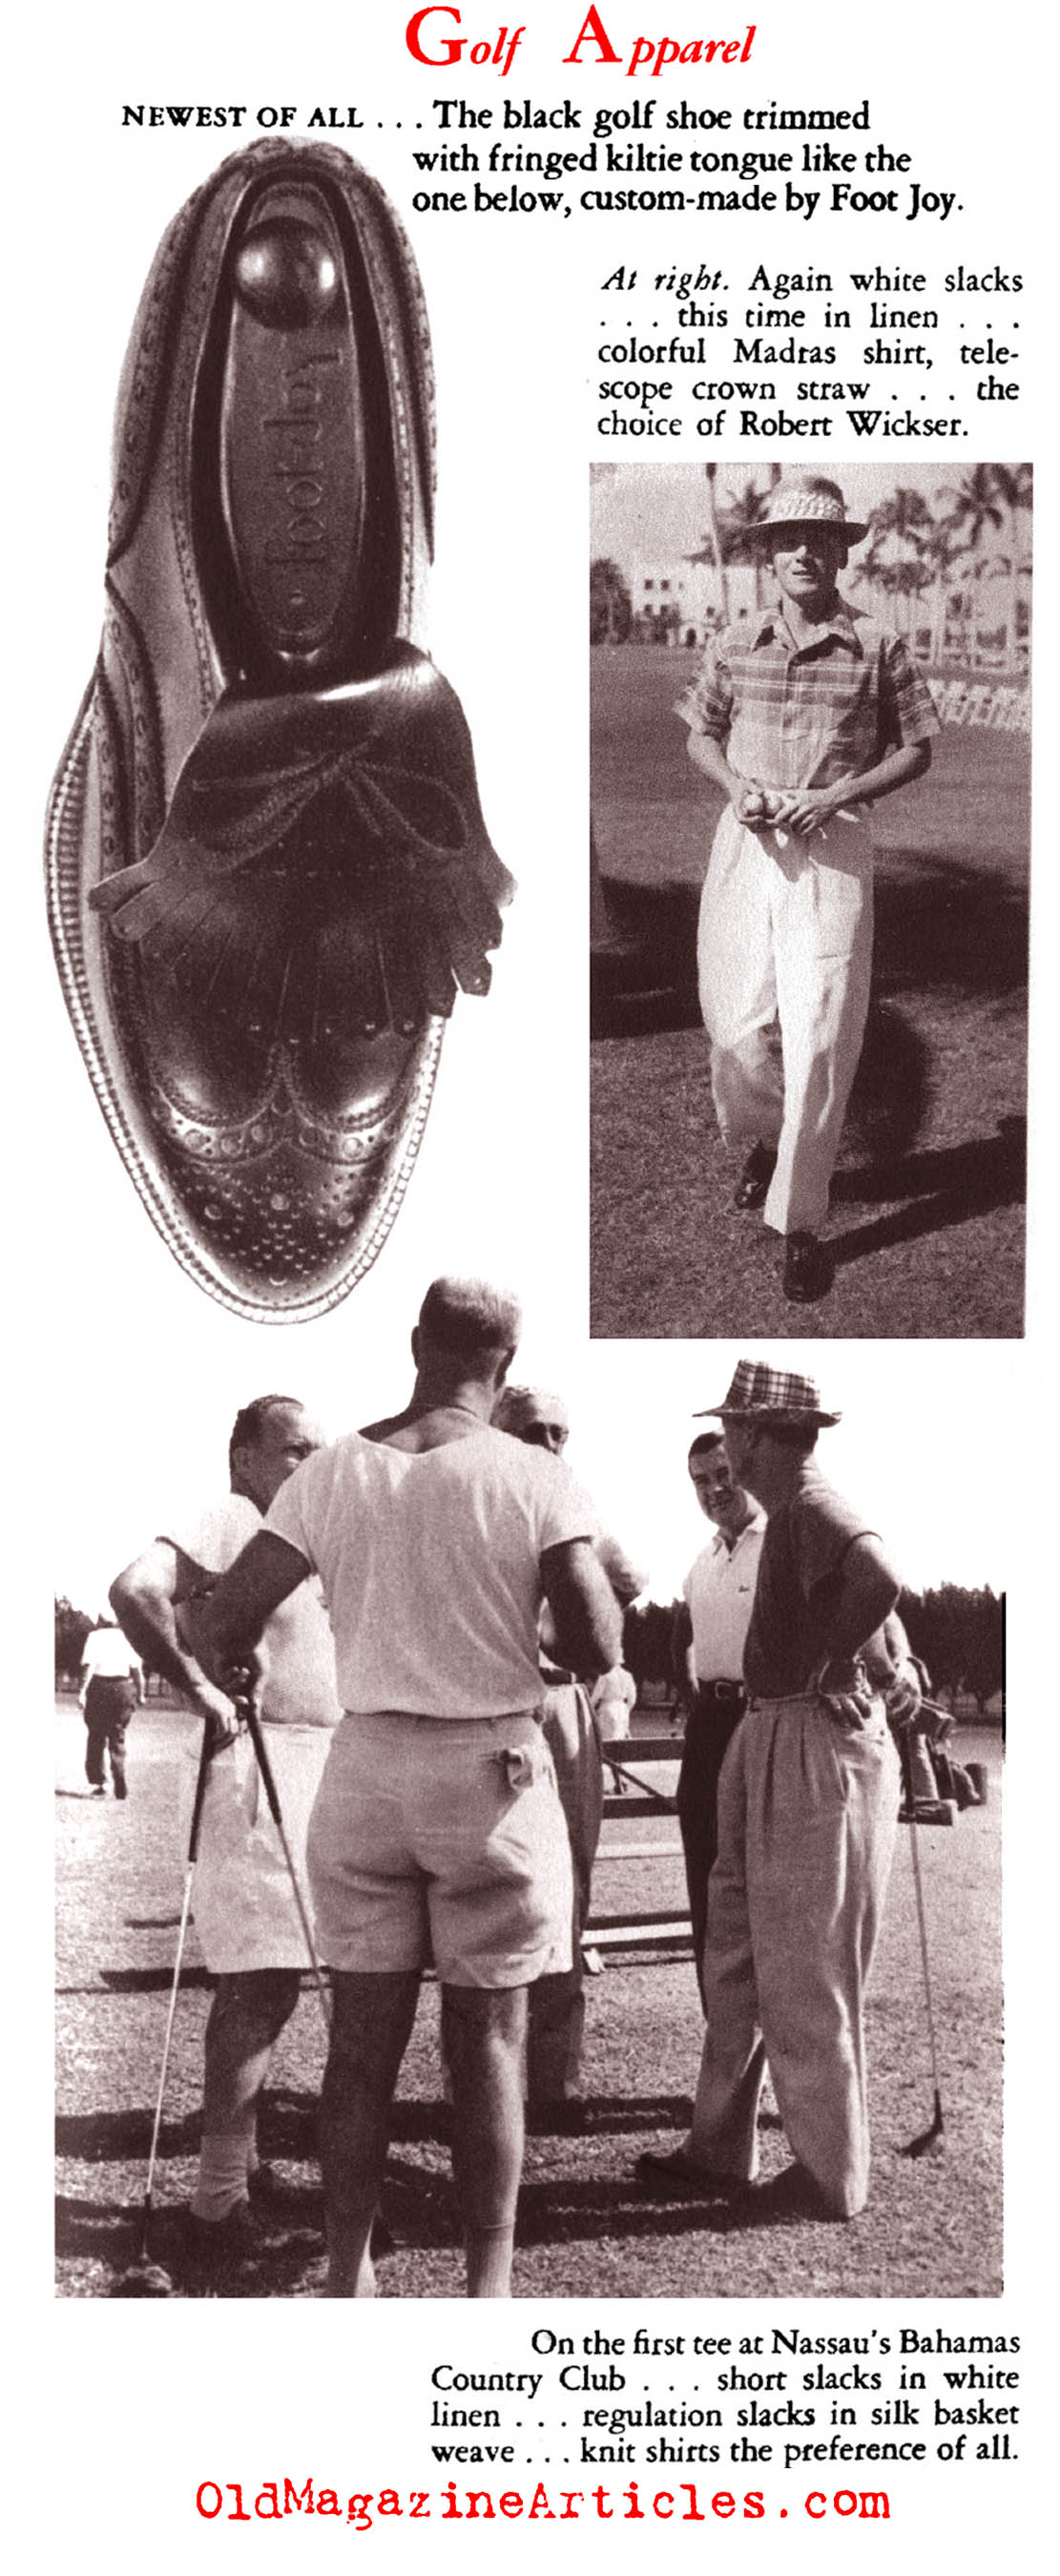 1950s Golf Attire (Gentry Magazine, 1953)